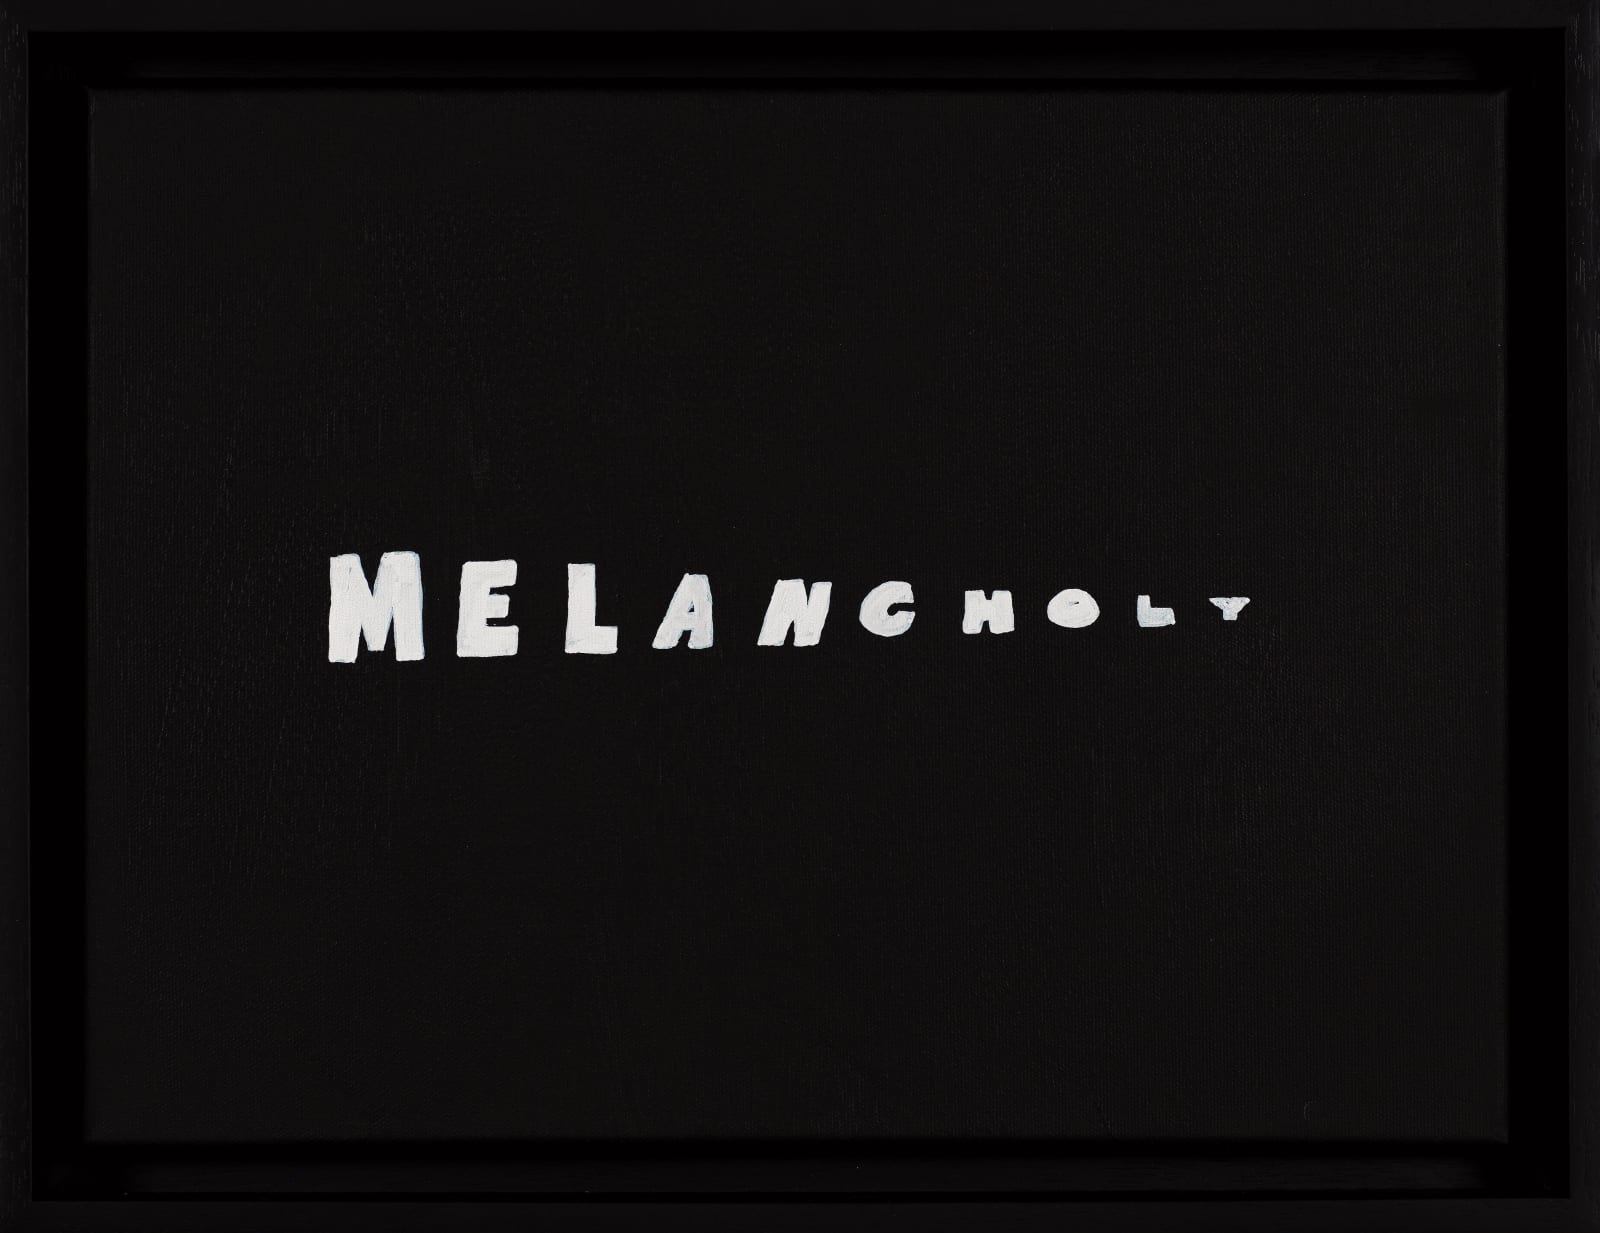 MELANCHOLY, 2022